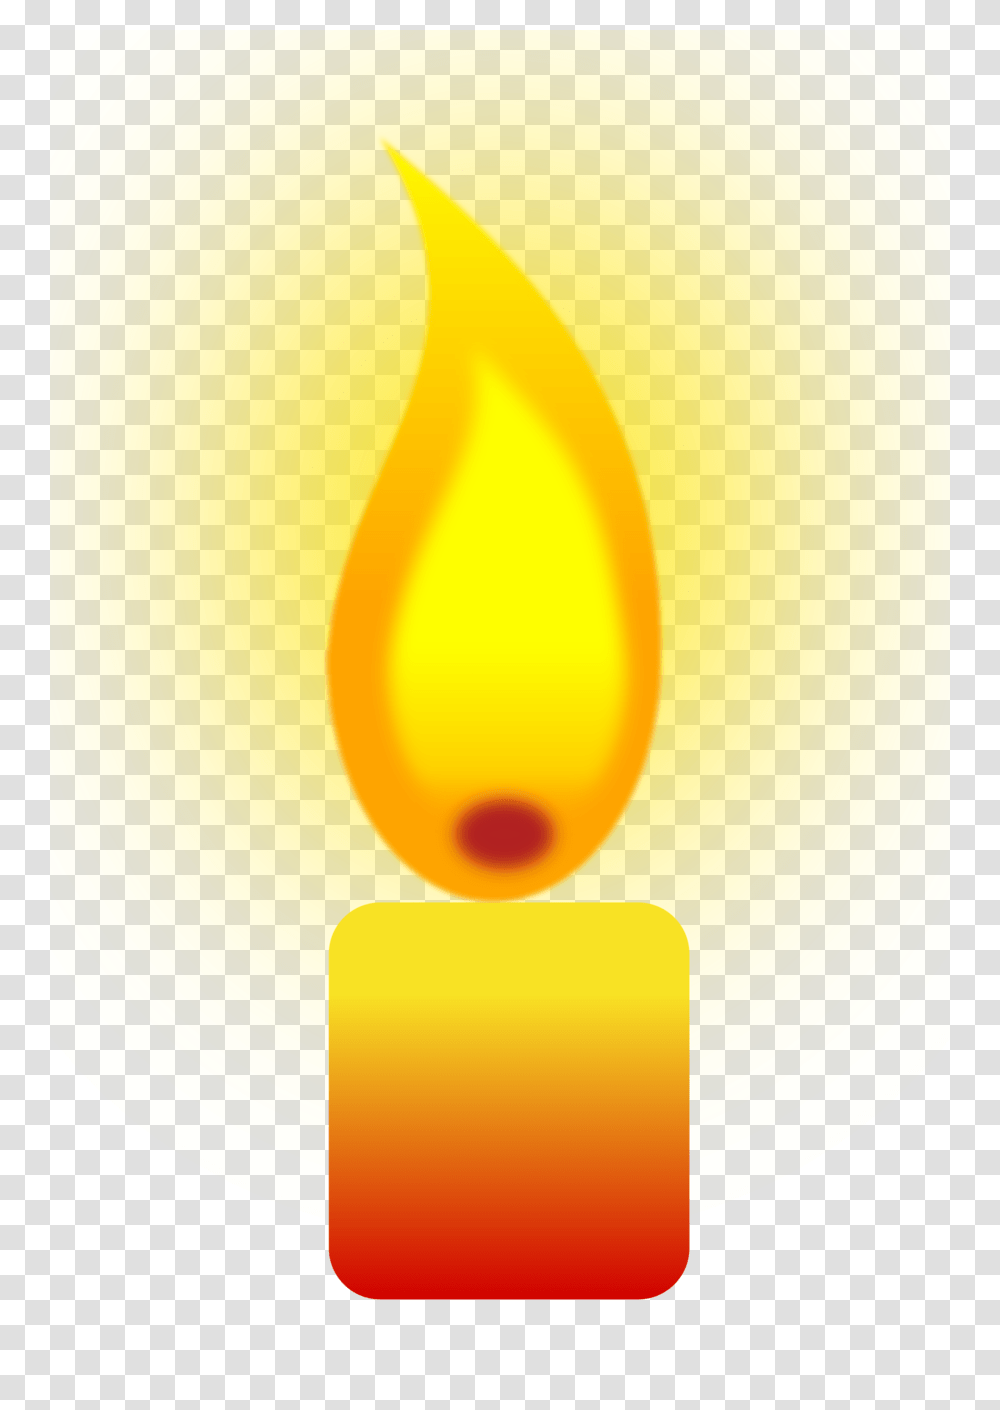 Download Candle Clipart Light Desktop Wallpaper Clip Art Candle, Fire, Flame, Orange Juice Transparent Png